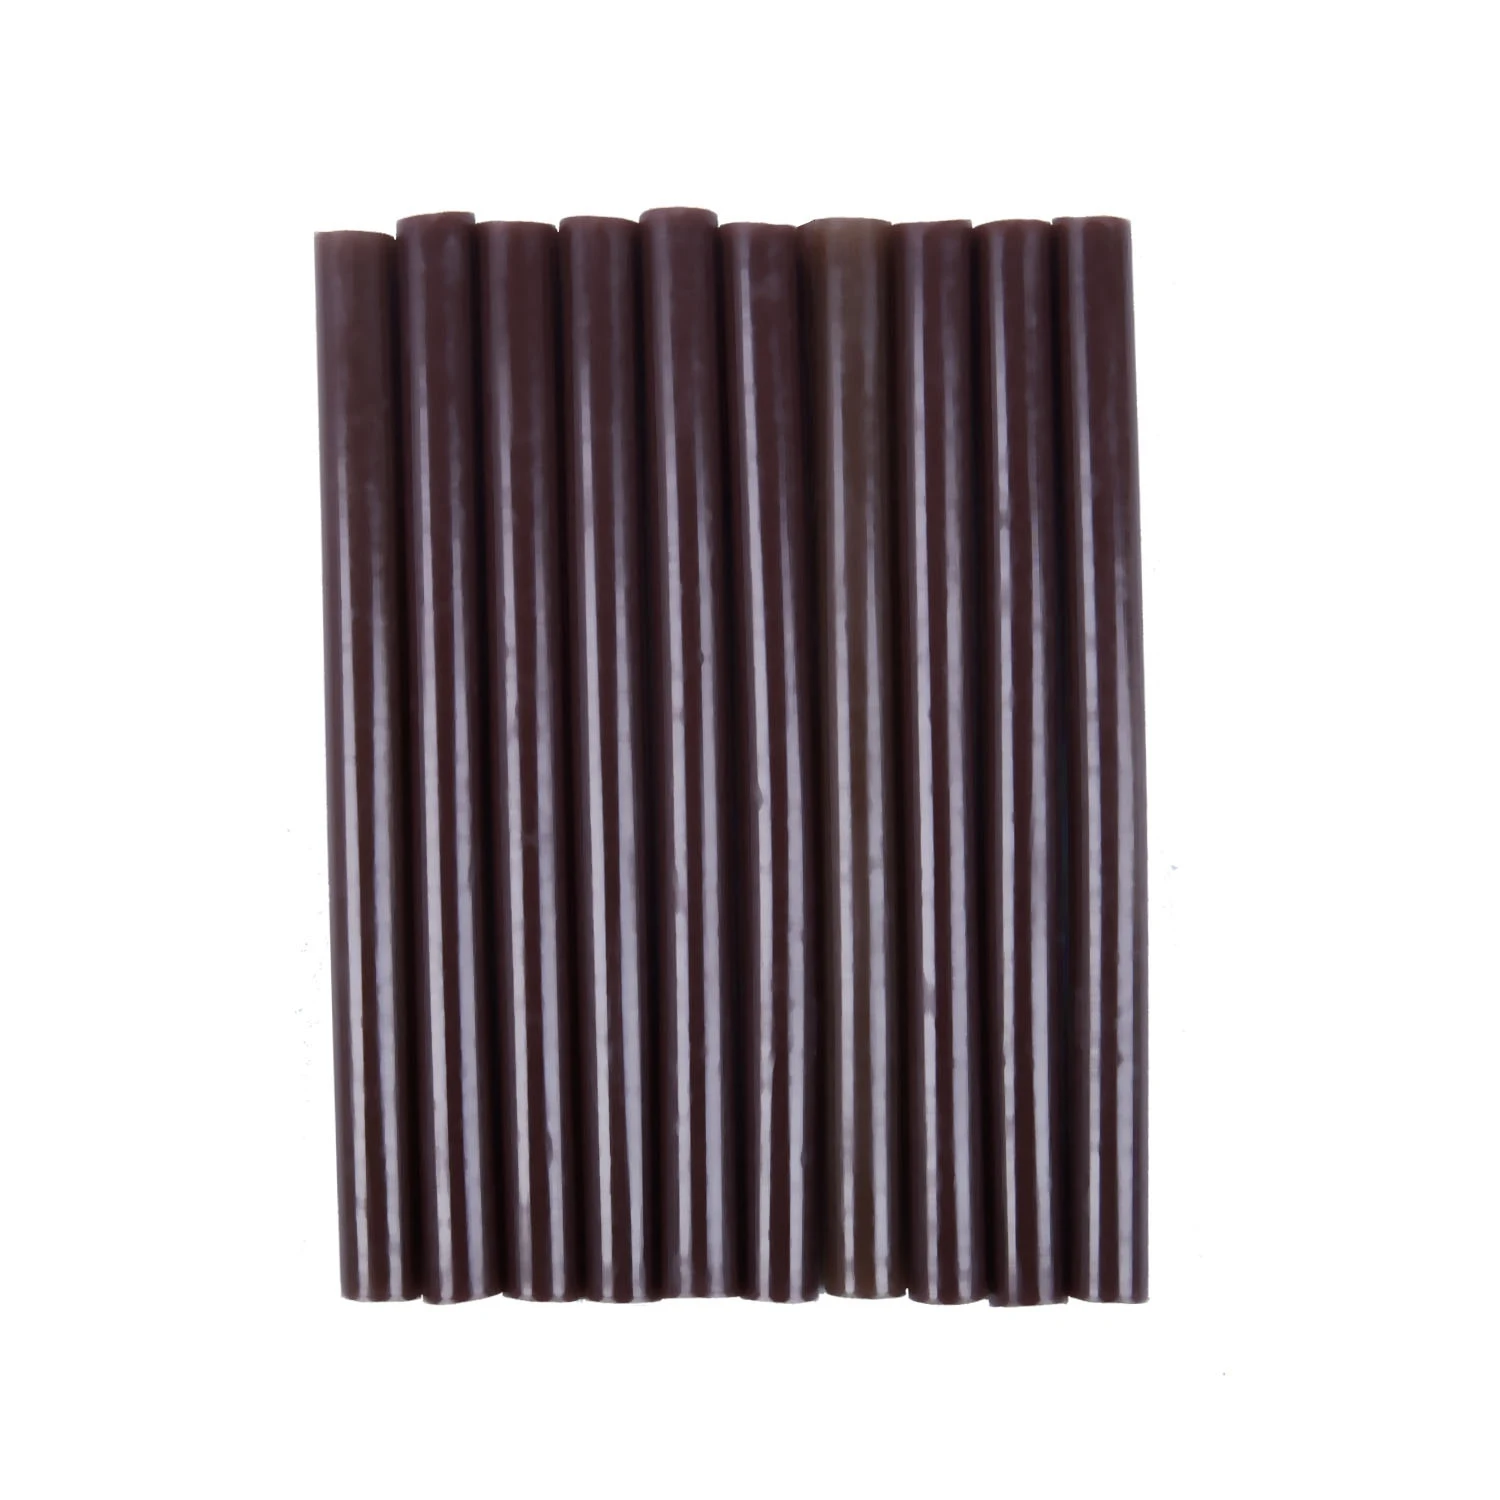 

10pcs 100mm x 7mm Adhesive Hot Melt Glue Sticks For Hot Melt Glue Gun Brown